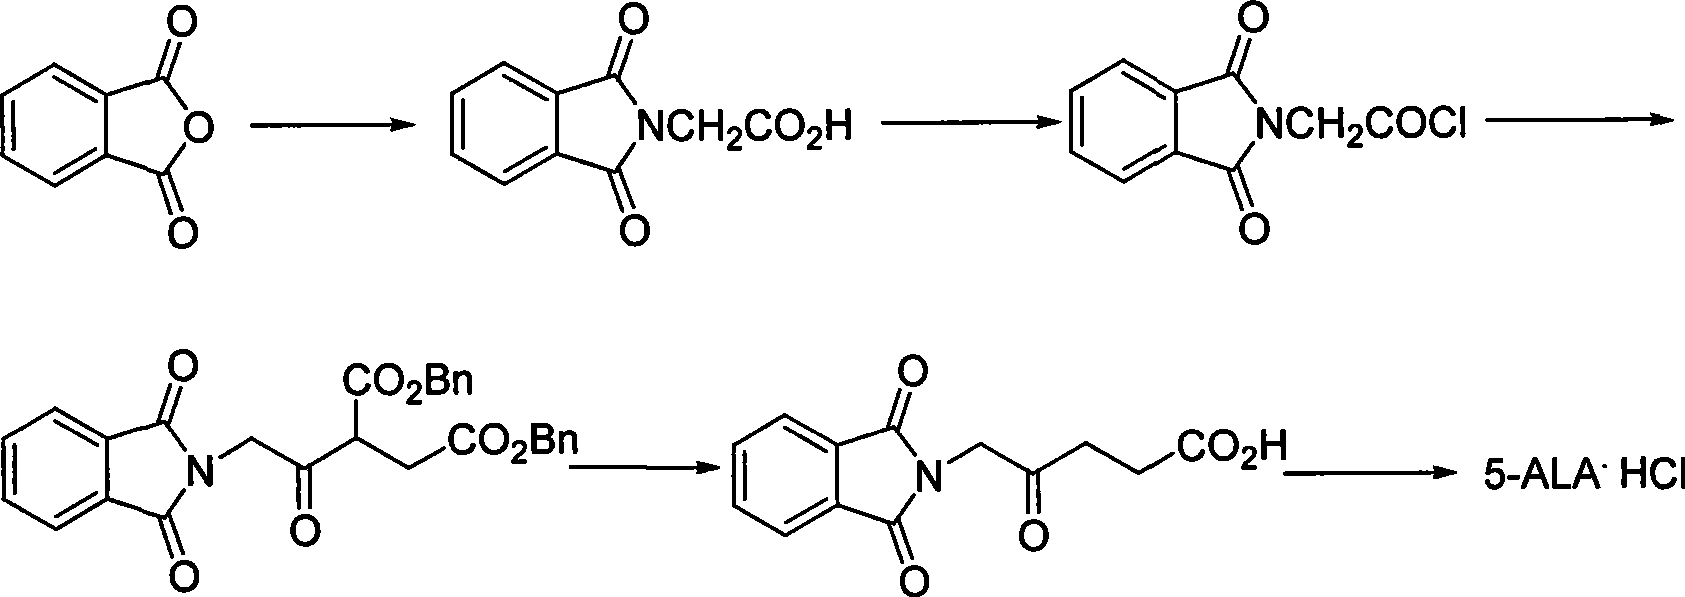 Process for synthesizing 5-aminovaleric acid hydrochloride